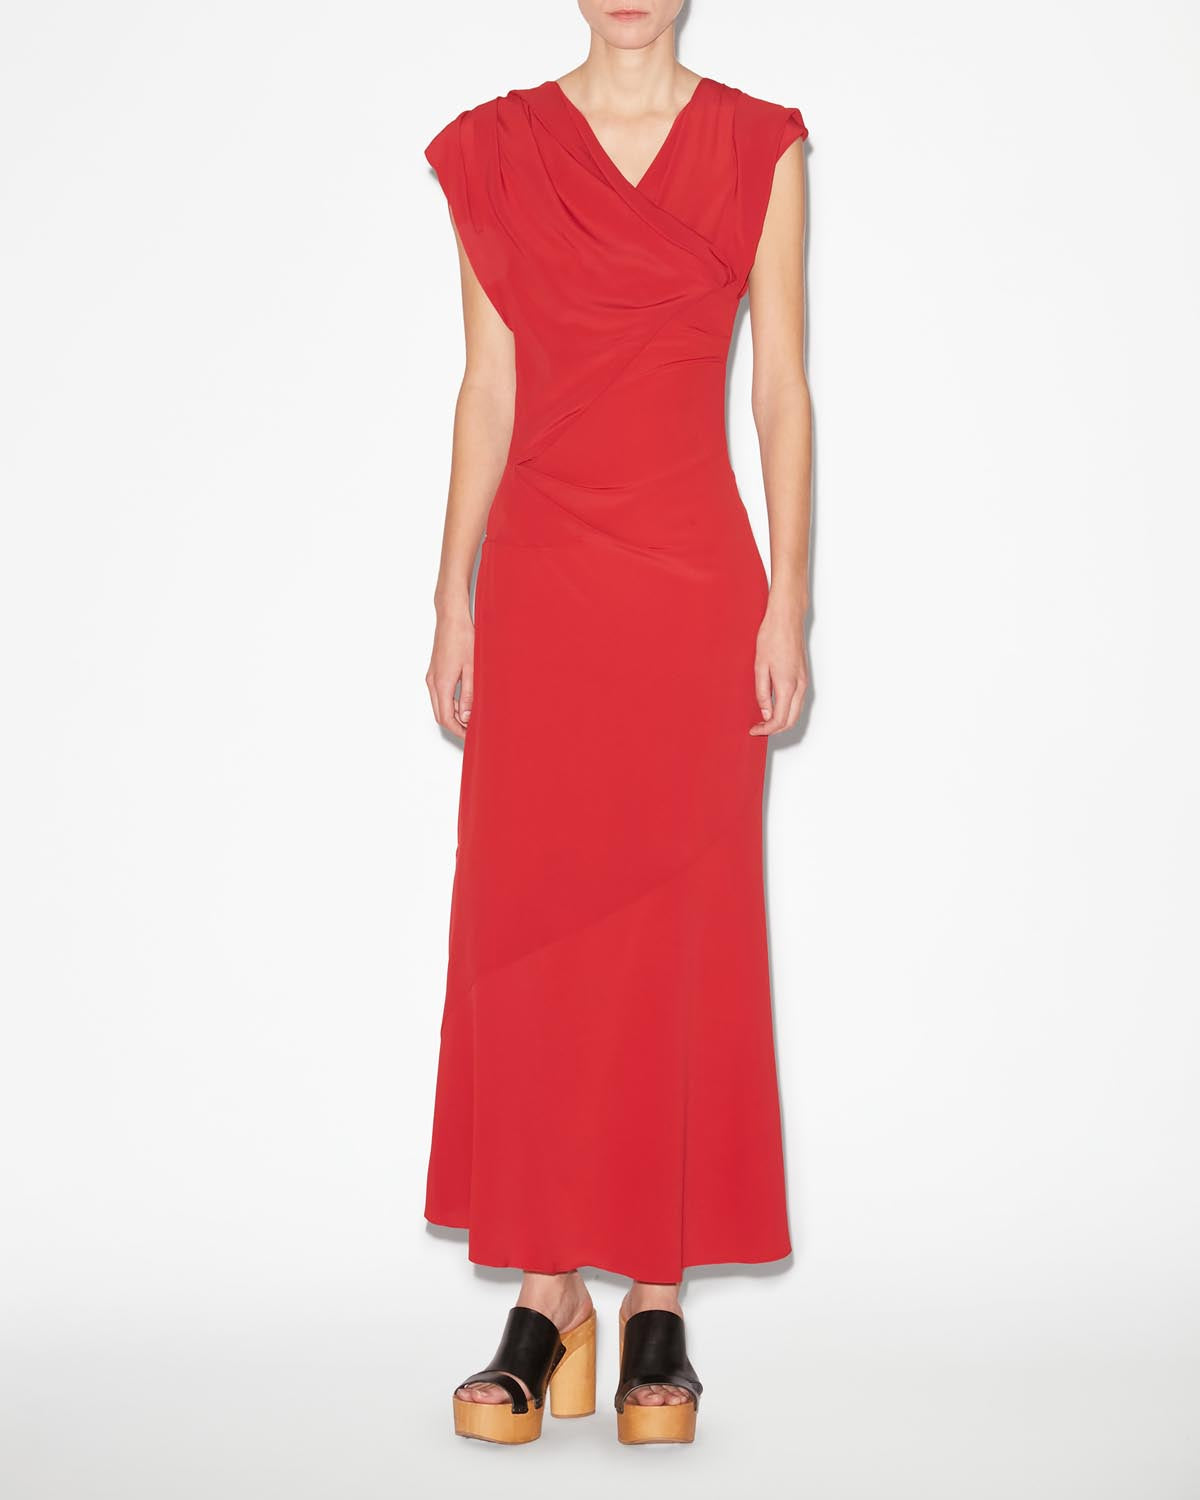 Kidena dress Woman Scarlet red 2